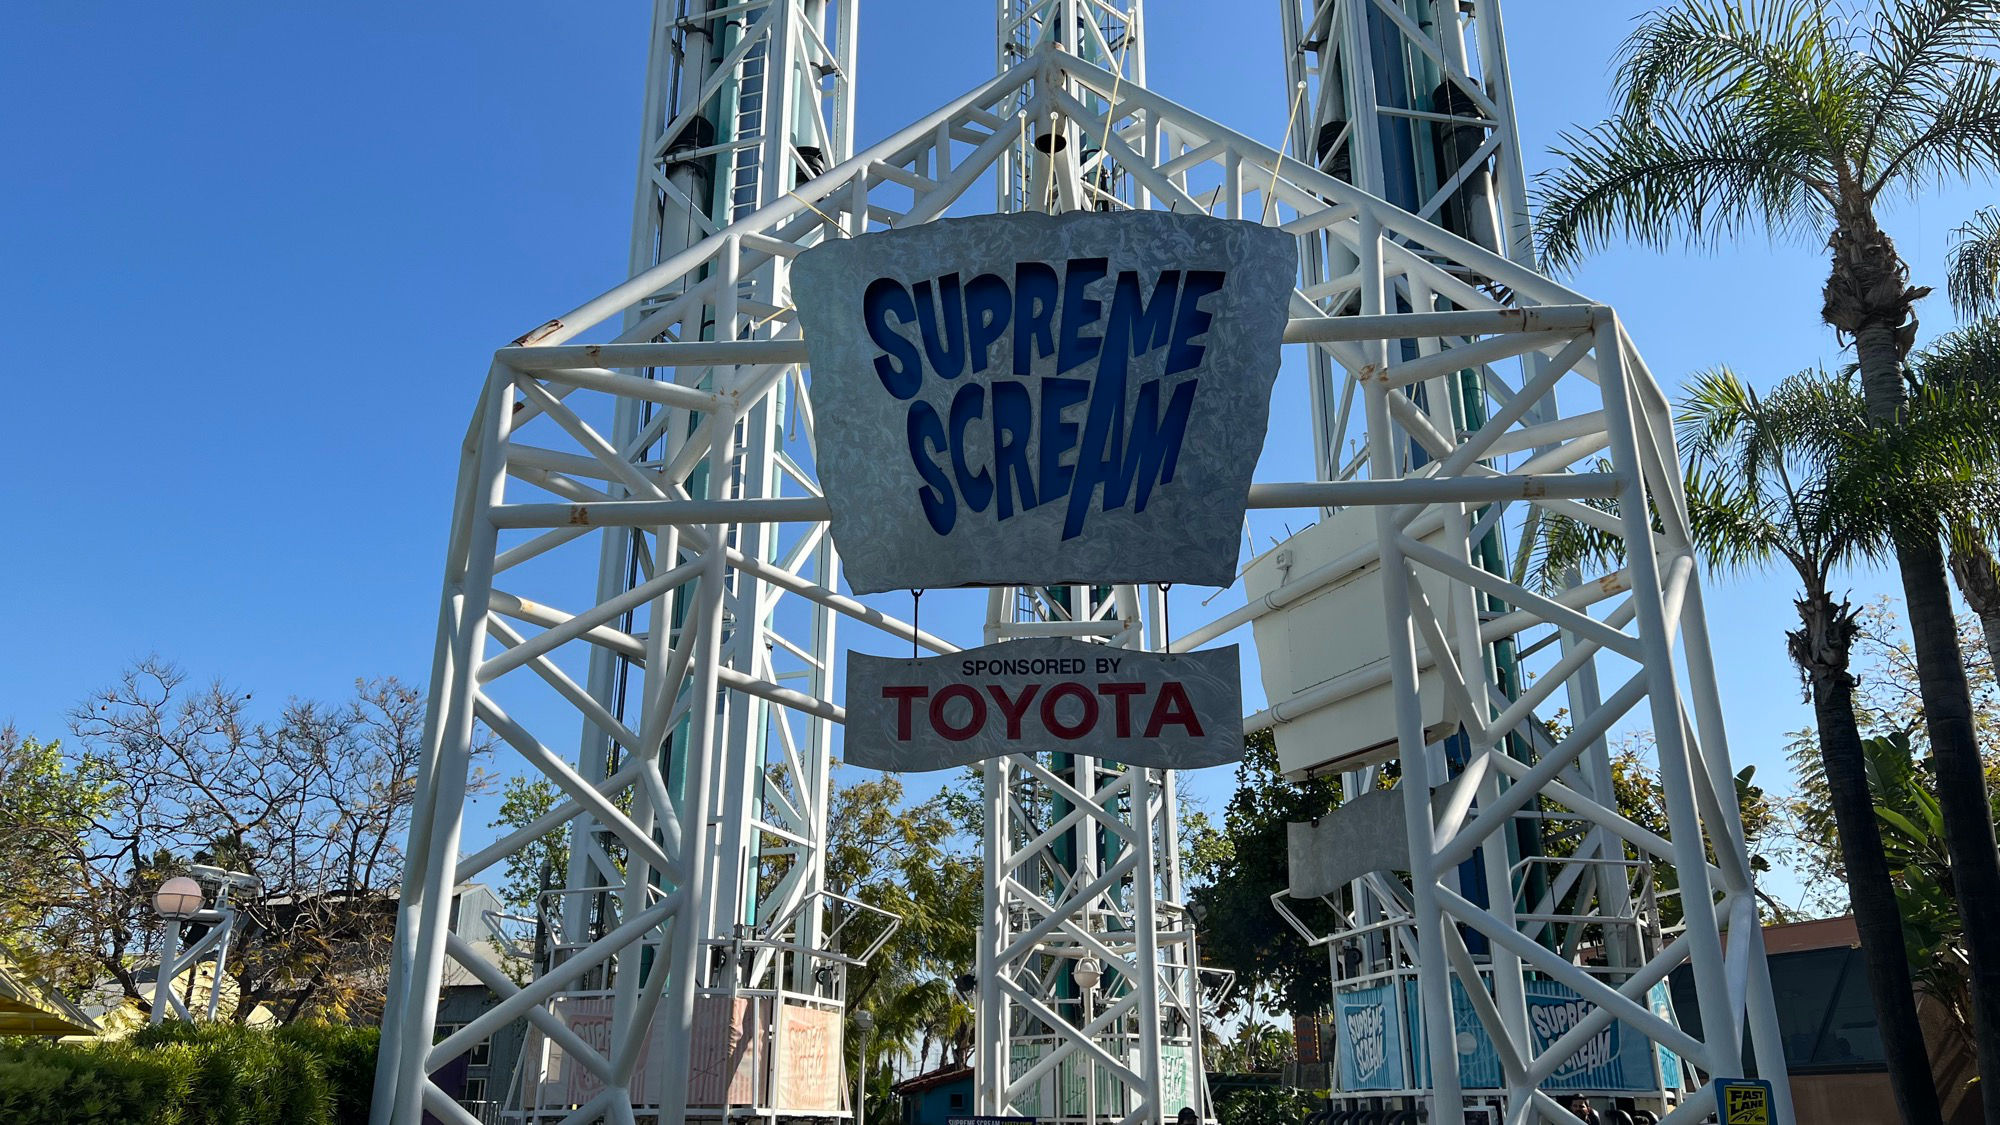 Supreme Scream Sponsored by Toyota